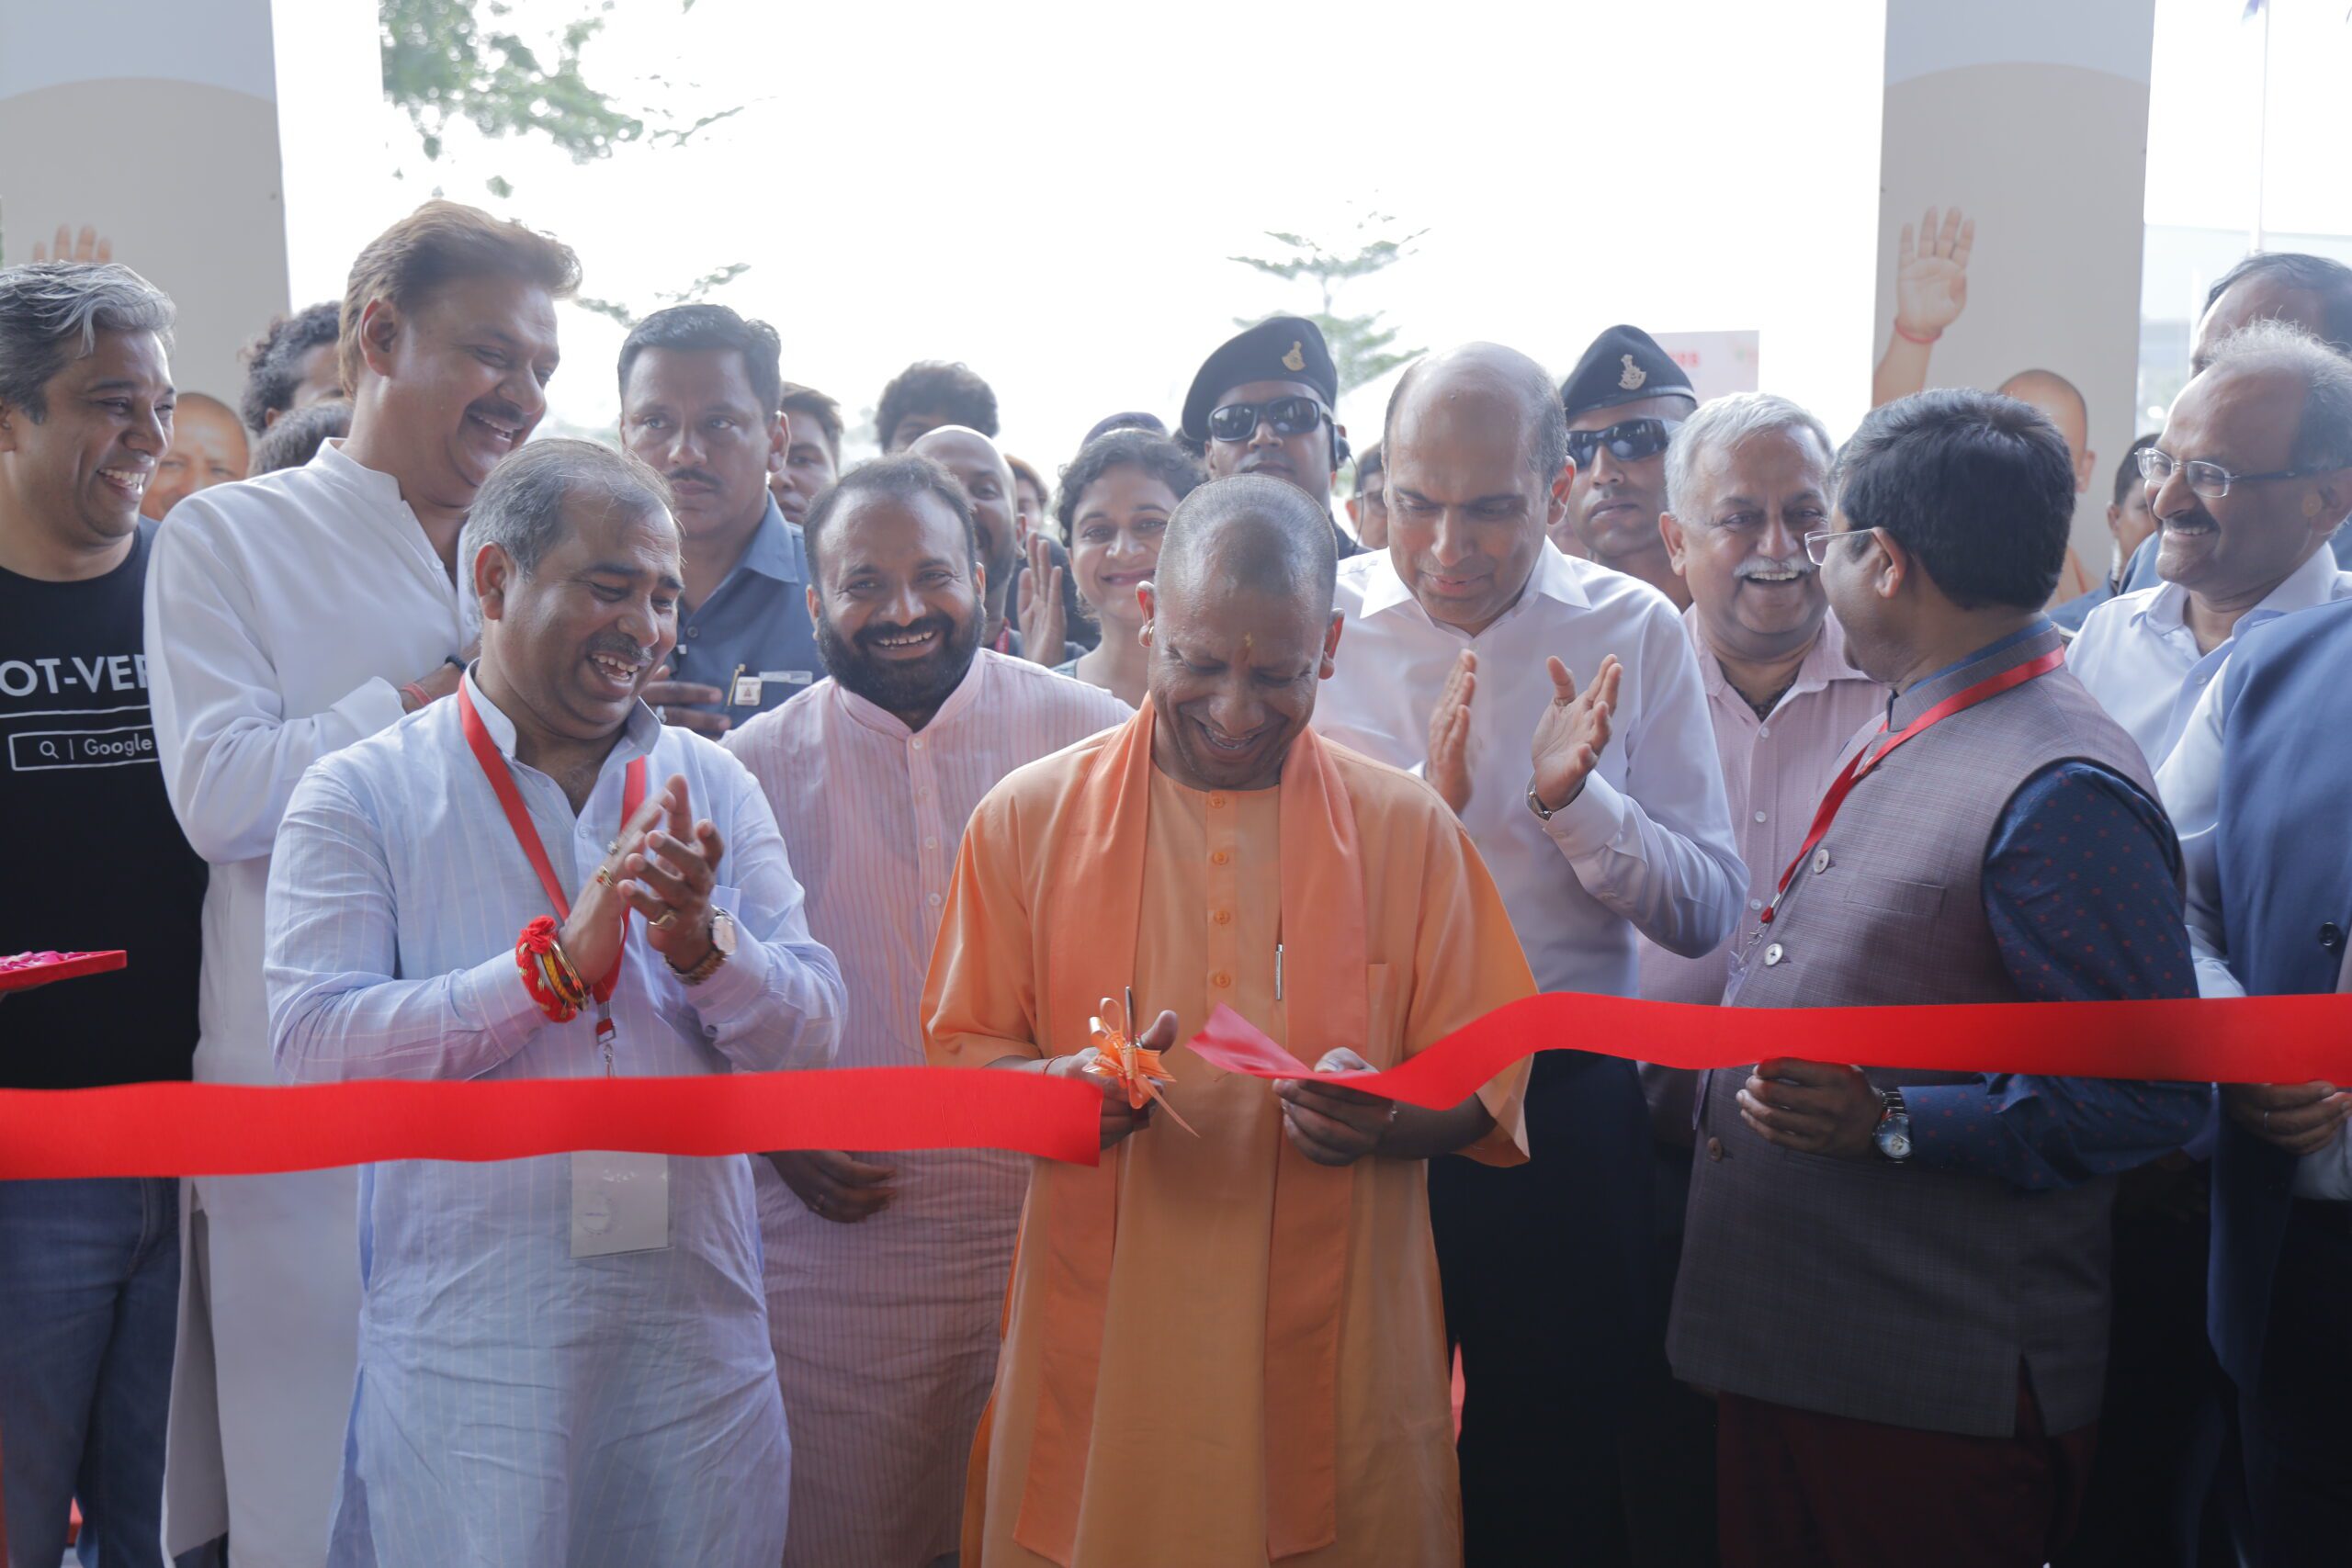 Uttar Pradesh CM, Yogi Adityanath inaugurates Addverb’s “Bot-Verse”